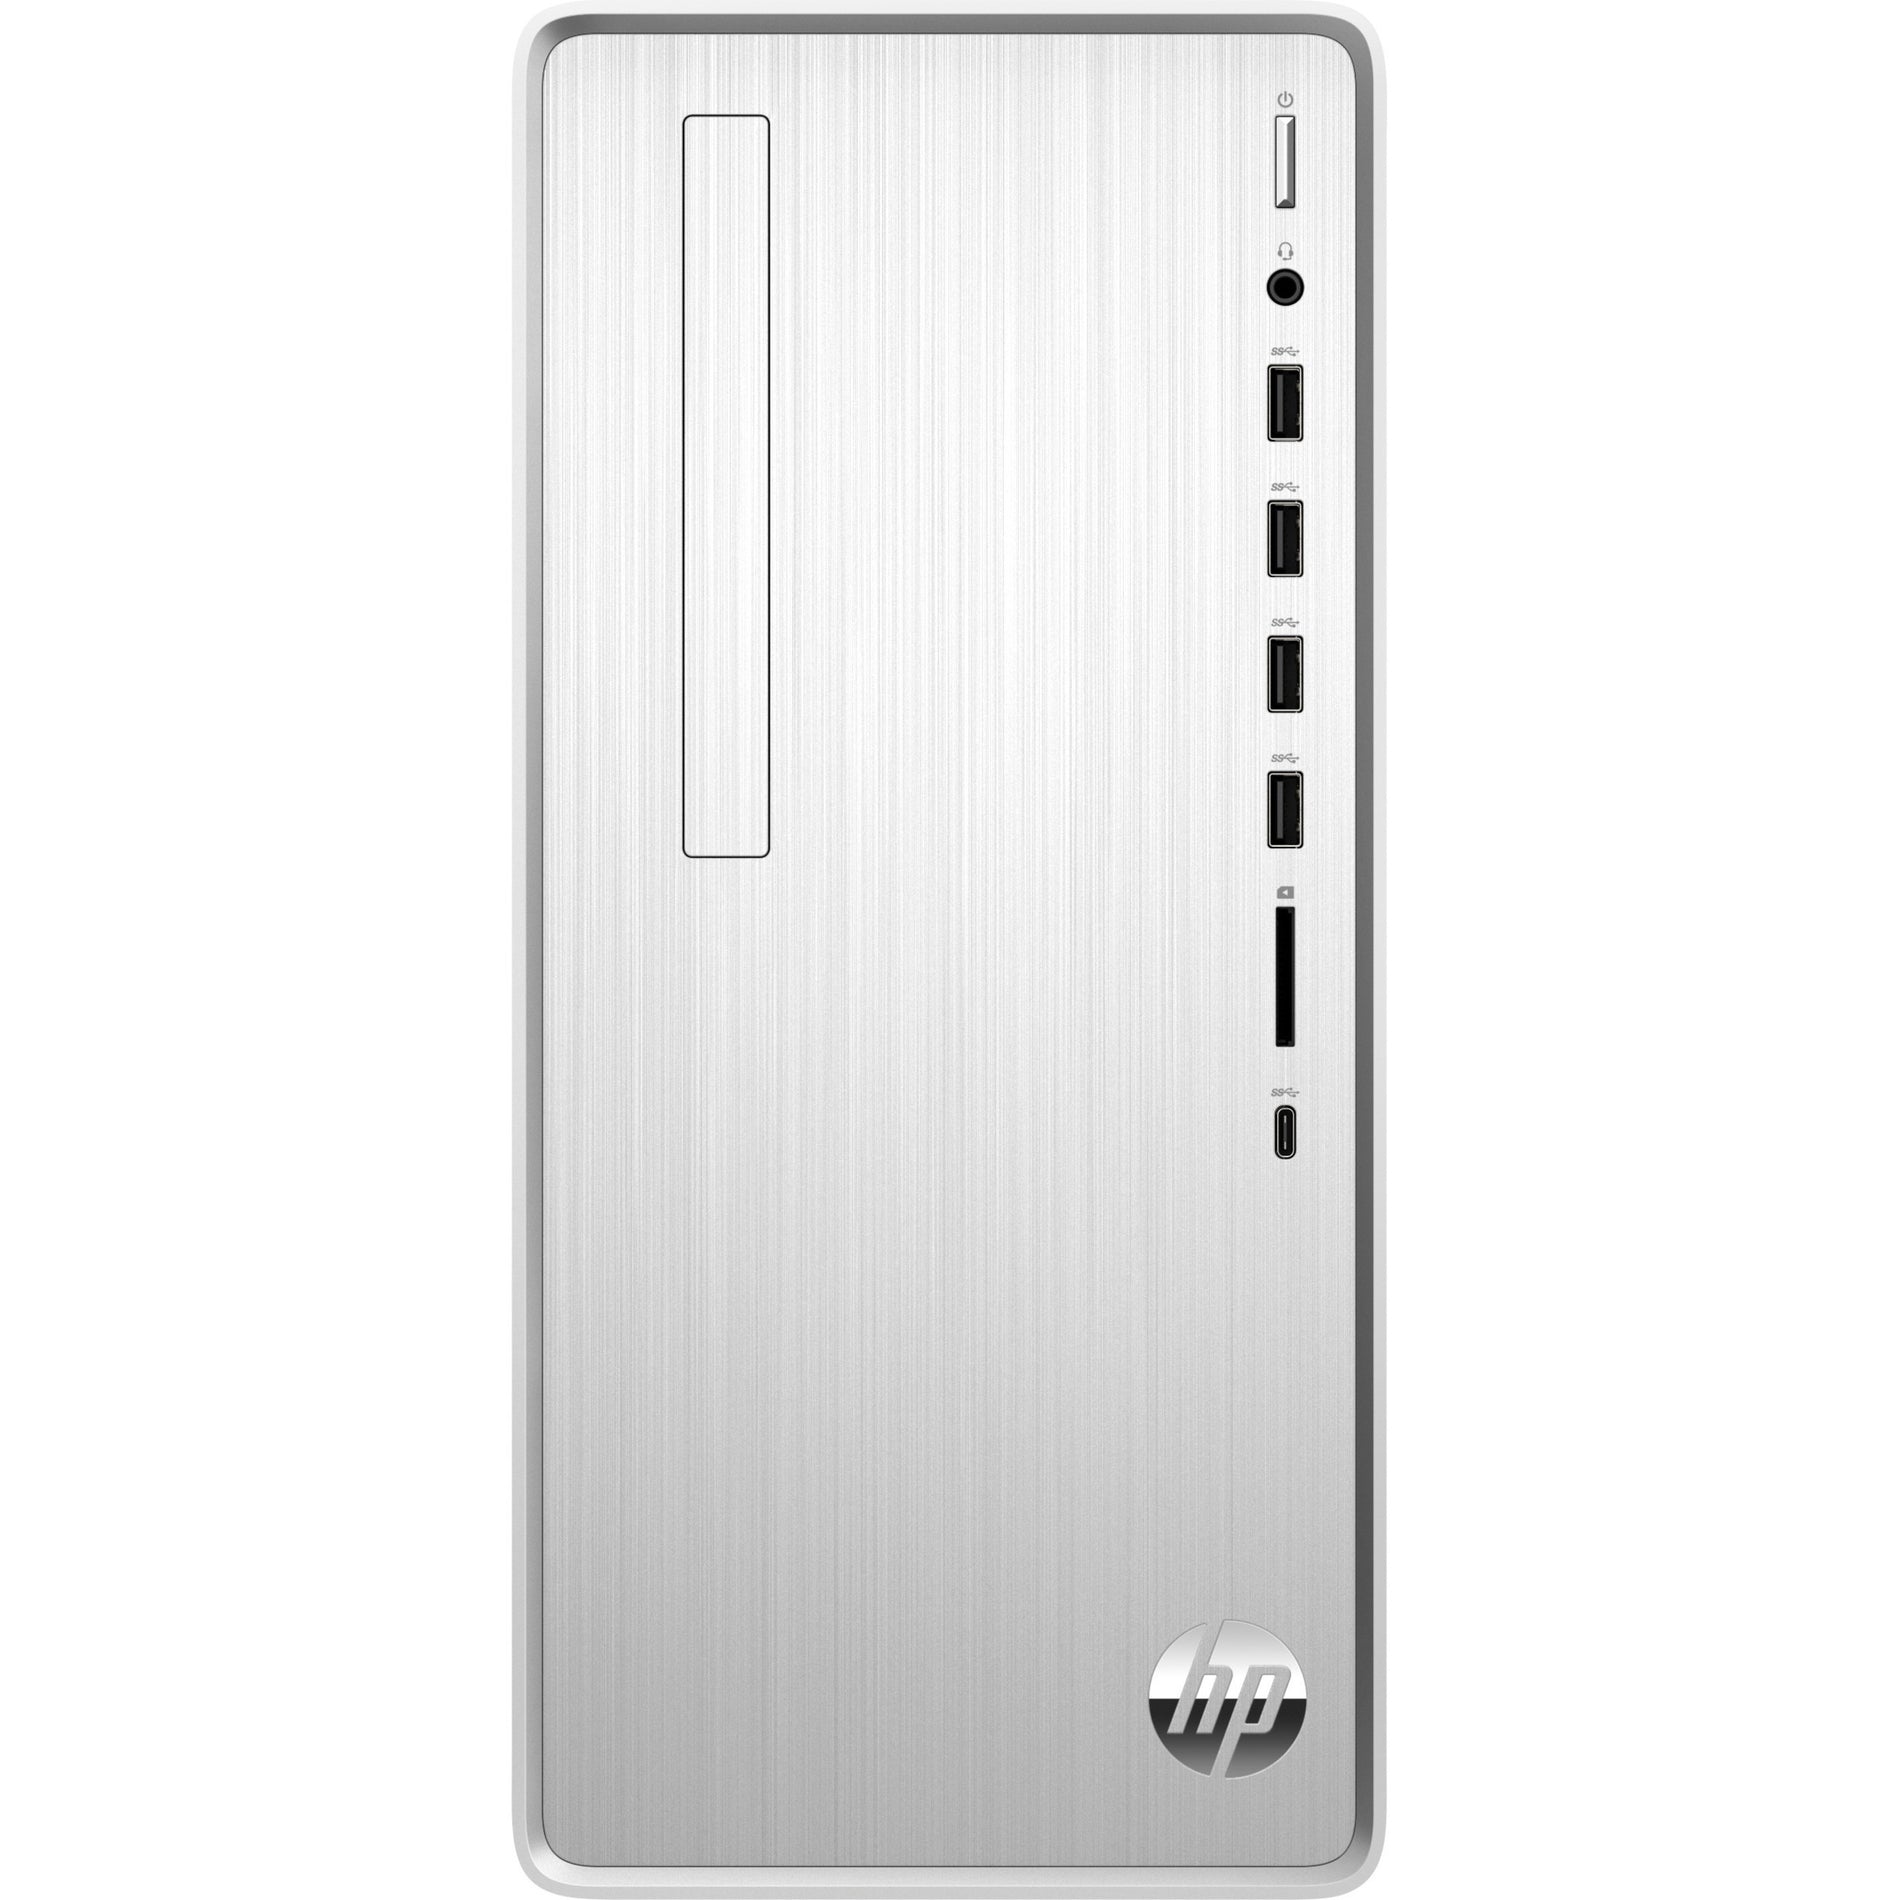 HP Pavilion TP01-3030 Desktop Computer, Intel Core i3 12th Gen, 8GB RAM, 512GB SSD, Windows 11